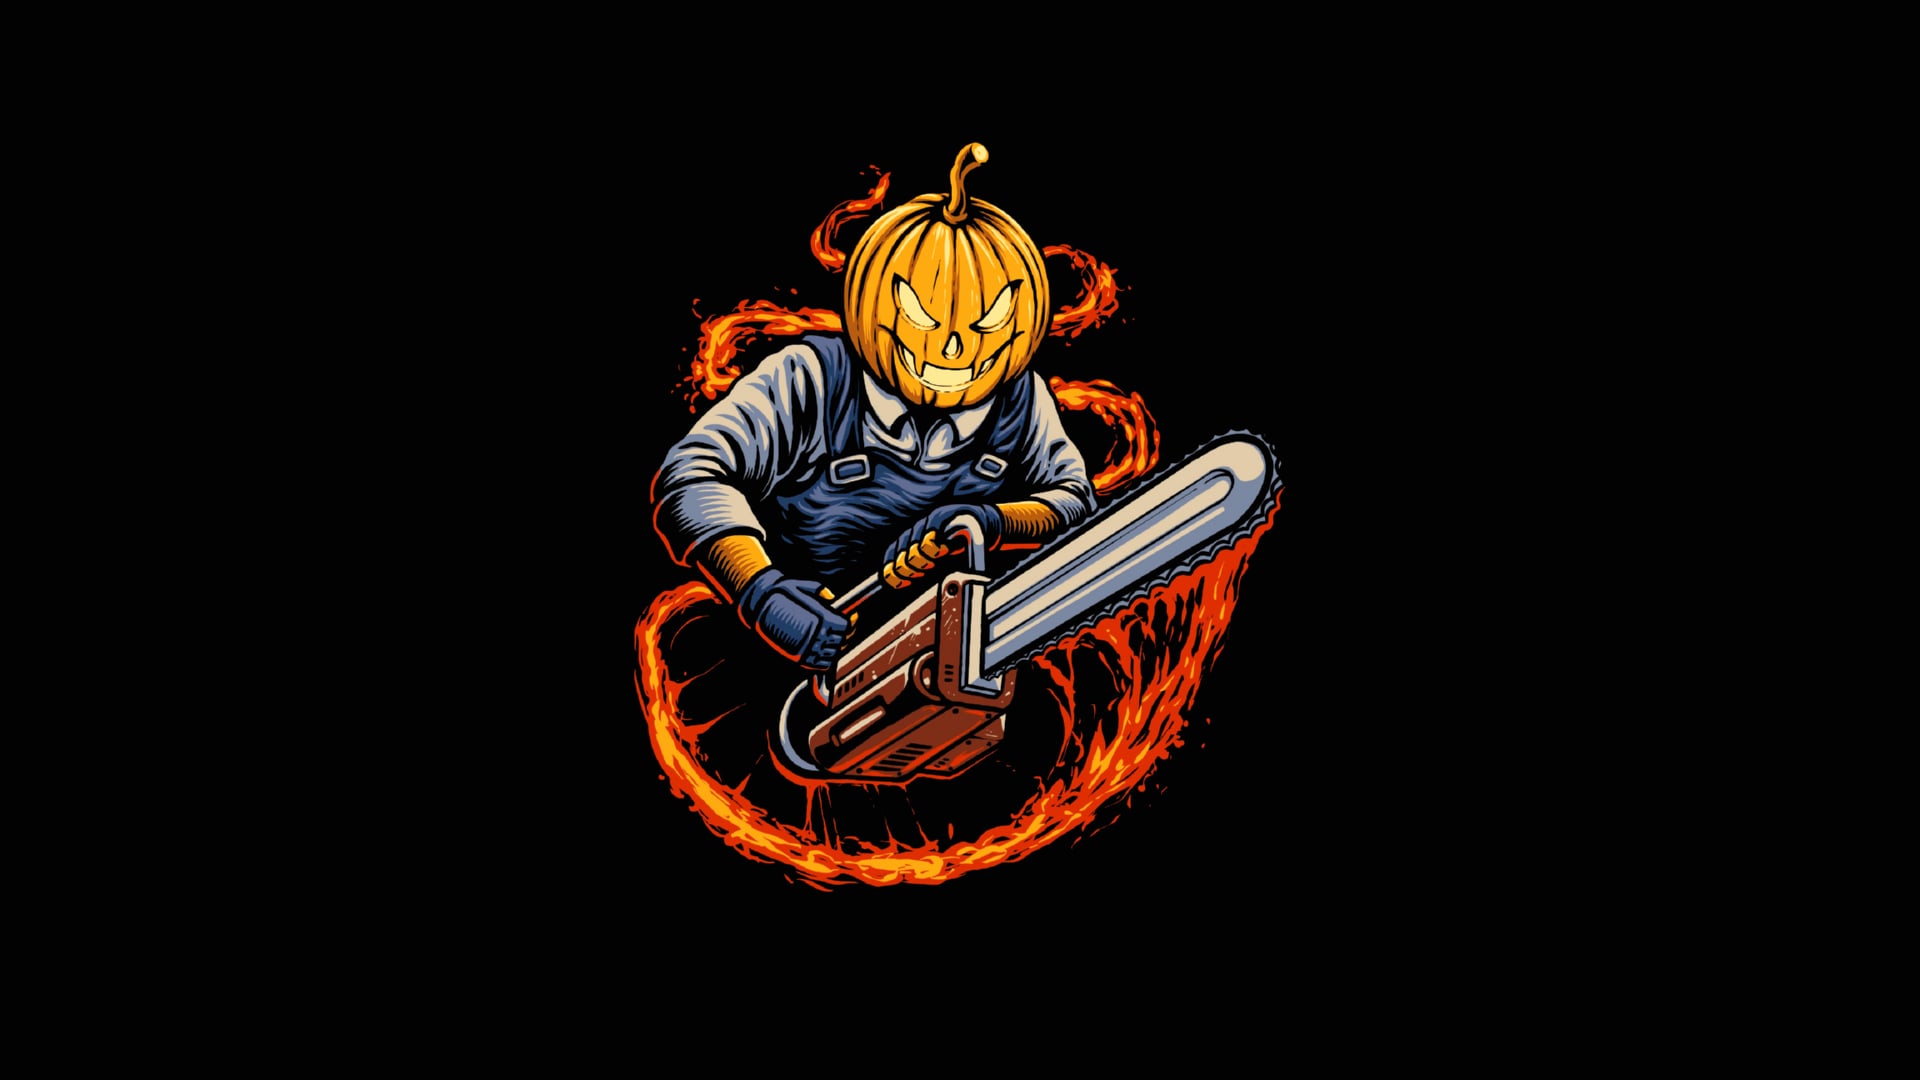 Digital Art Halloween Pumpkin at 320 x 480 iPhone size wallpapers HD quality